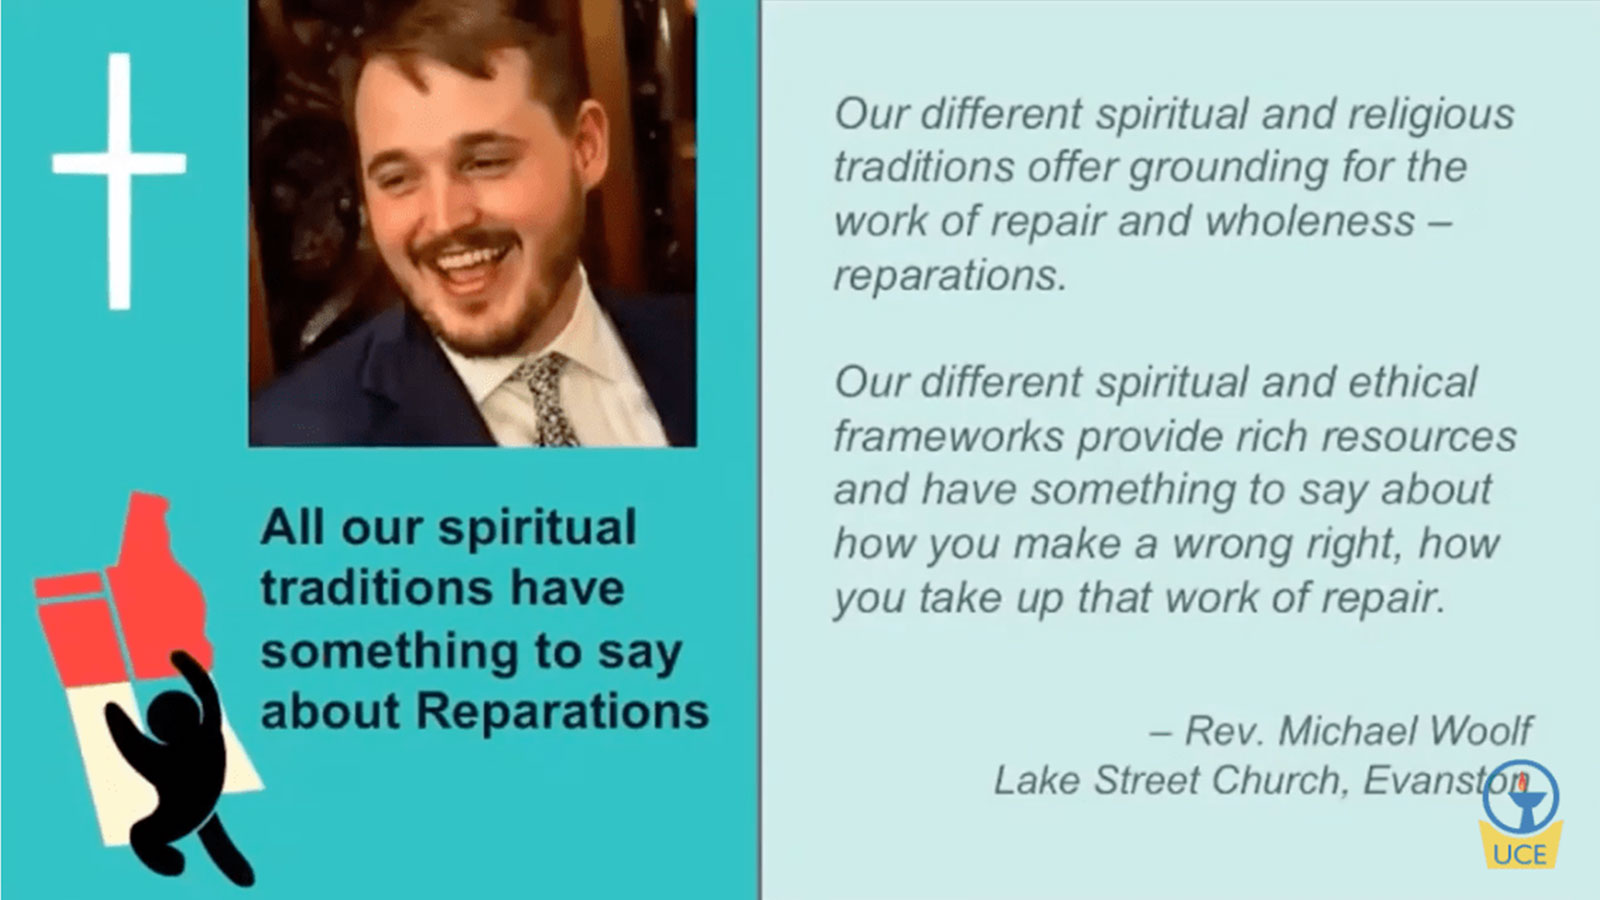 (Image from Unitarian Church of Evanston presentation)